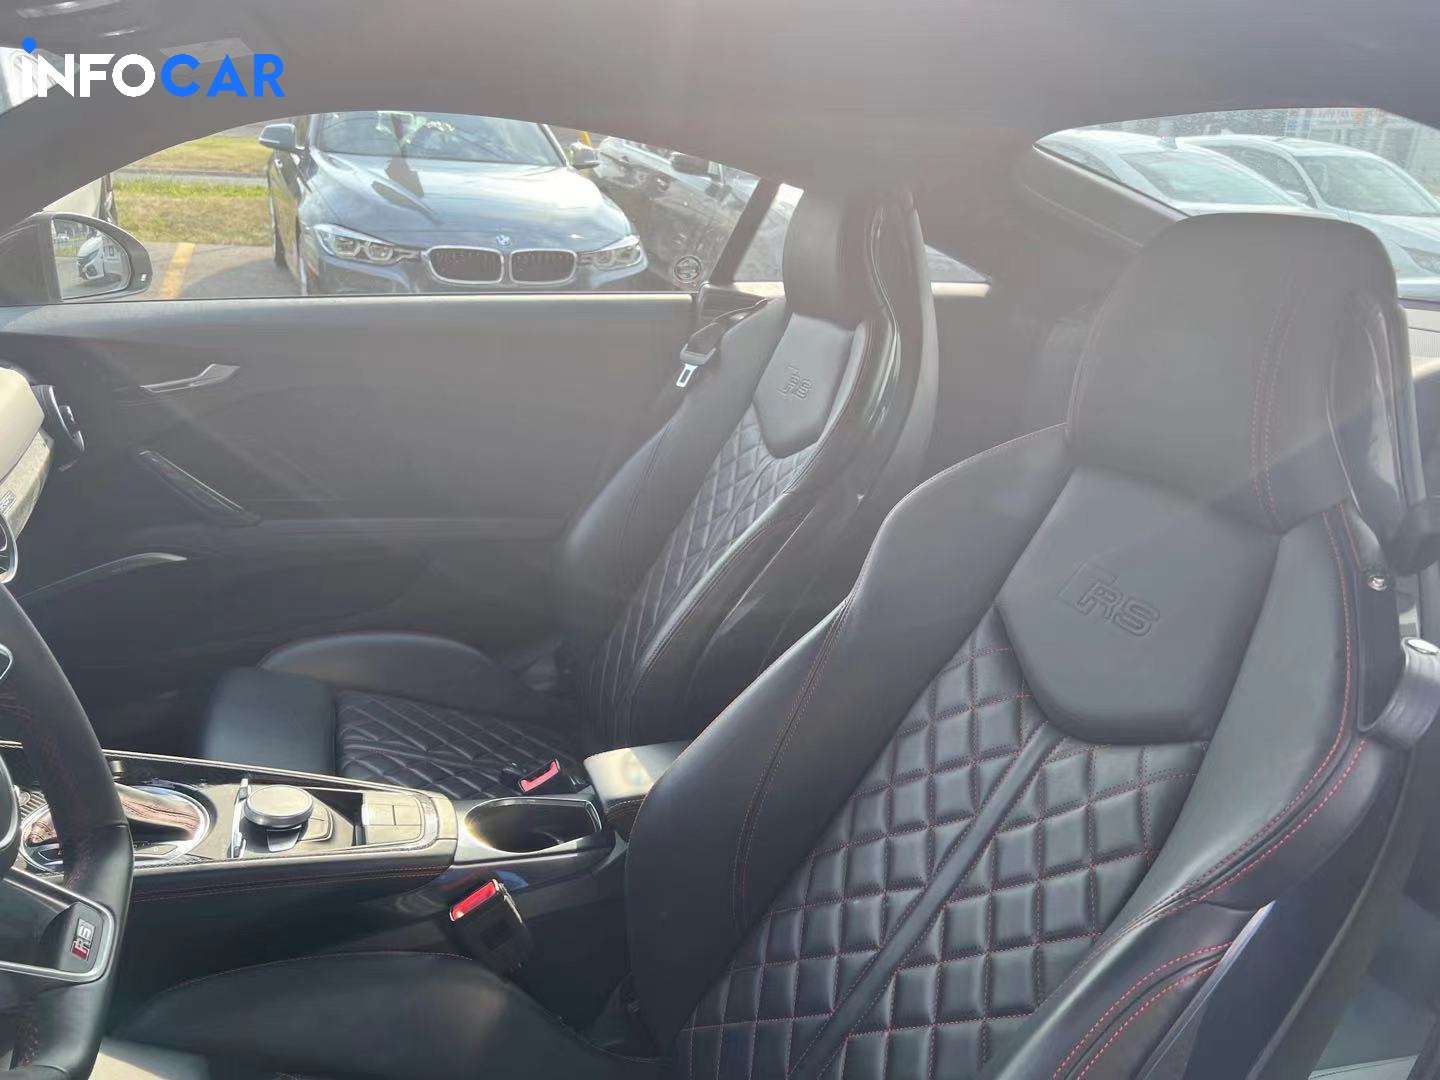 2018 Audi TT RS - INFOCAR - Toronto Auto Trading Platform